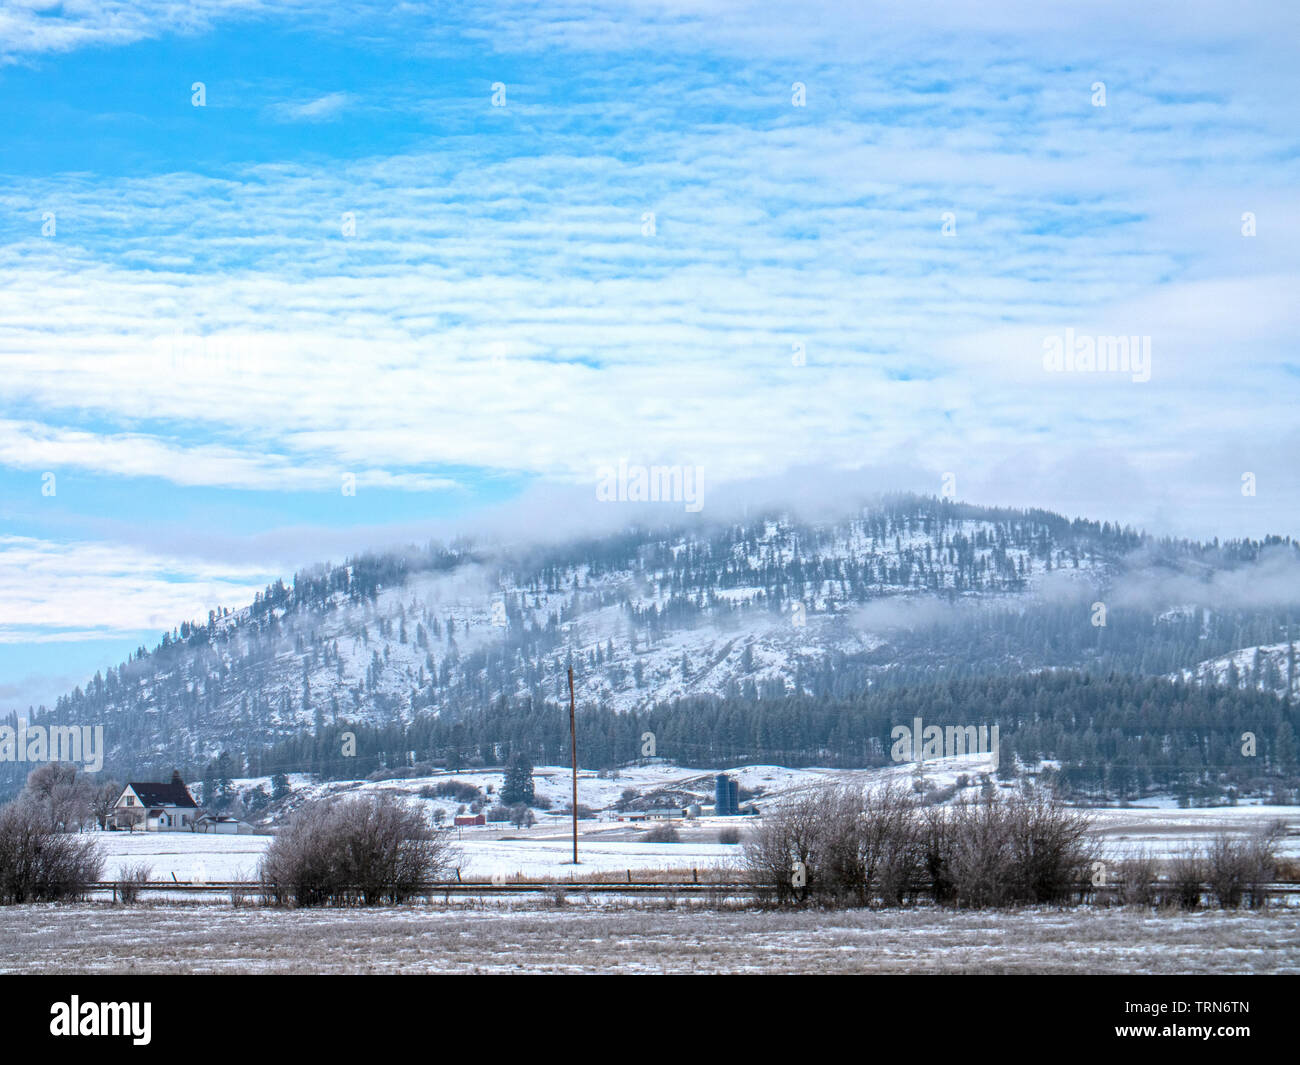 Chewelah Washington USA Farm Land Mountain Backdrop Snowy Winter Day Under Blue Sky Cloud Cover Stock Photo